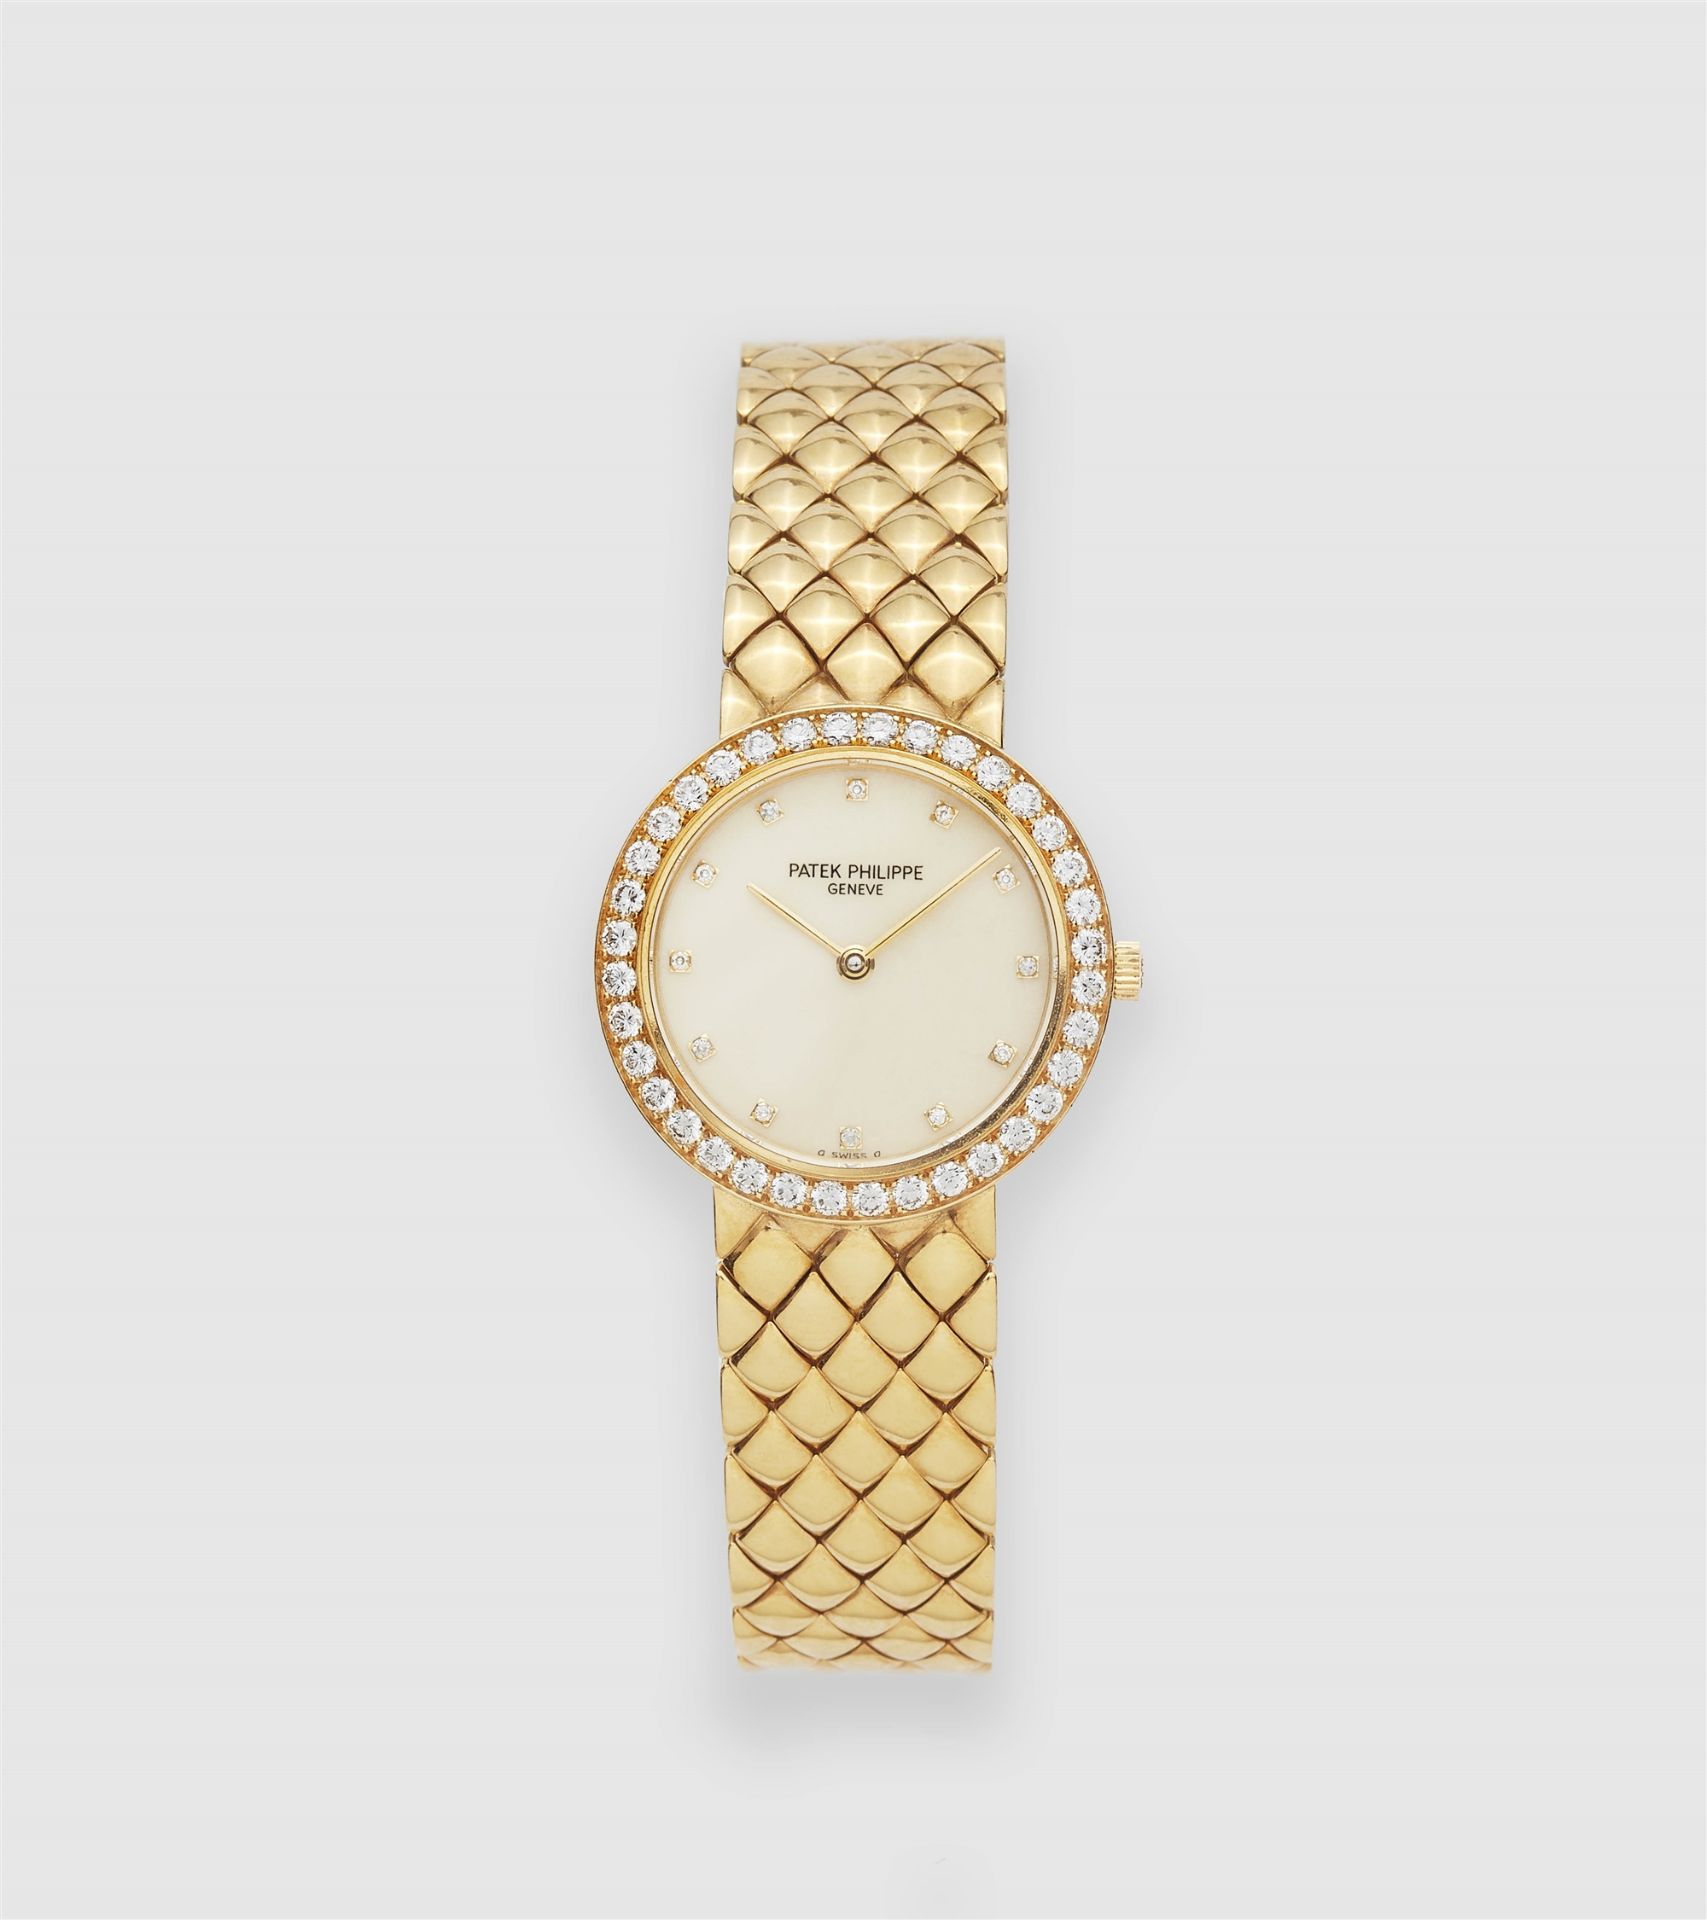 An 18k yellow gold and diamond quartz Patek Philippe ladies' wristwatch.